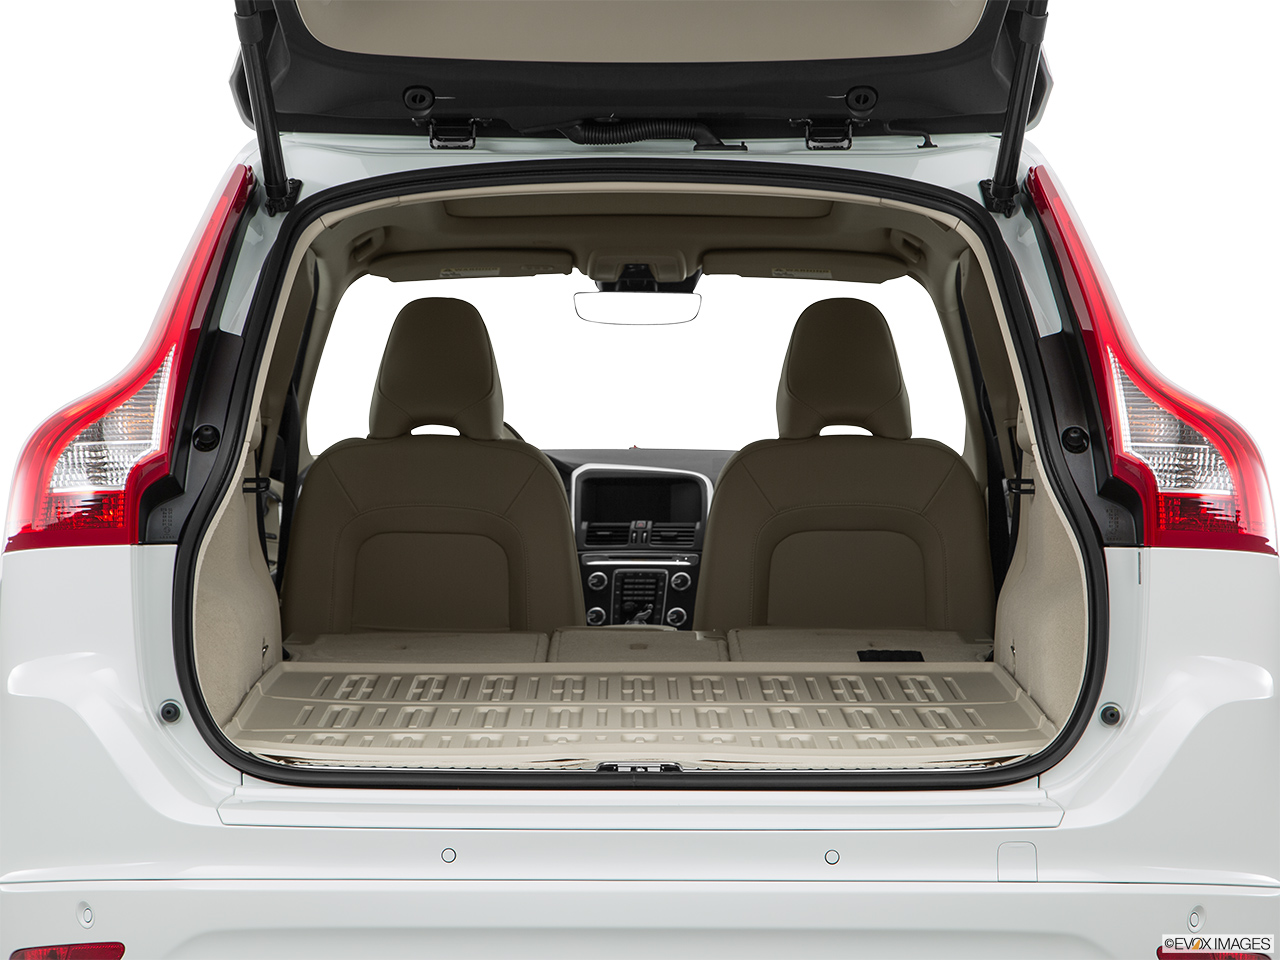 2016 Volvo XC60 T5 Drive-E FWD Premier Hatchback & SUV rear angle. 